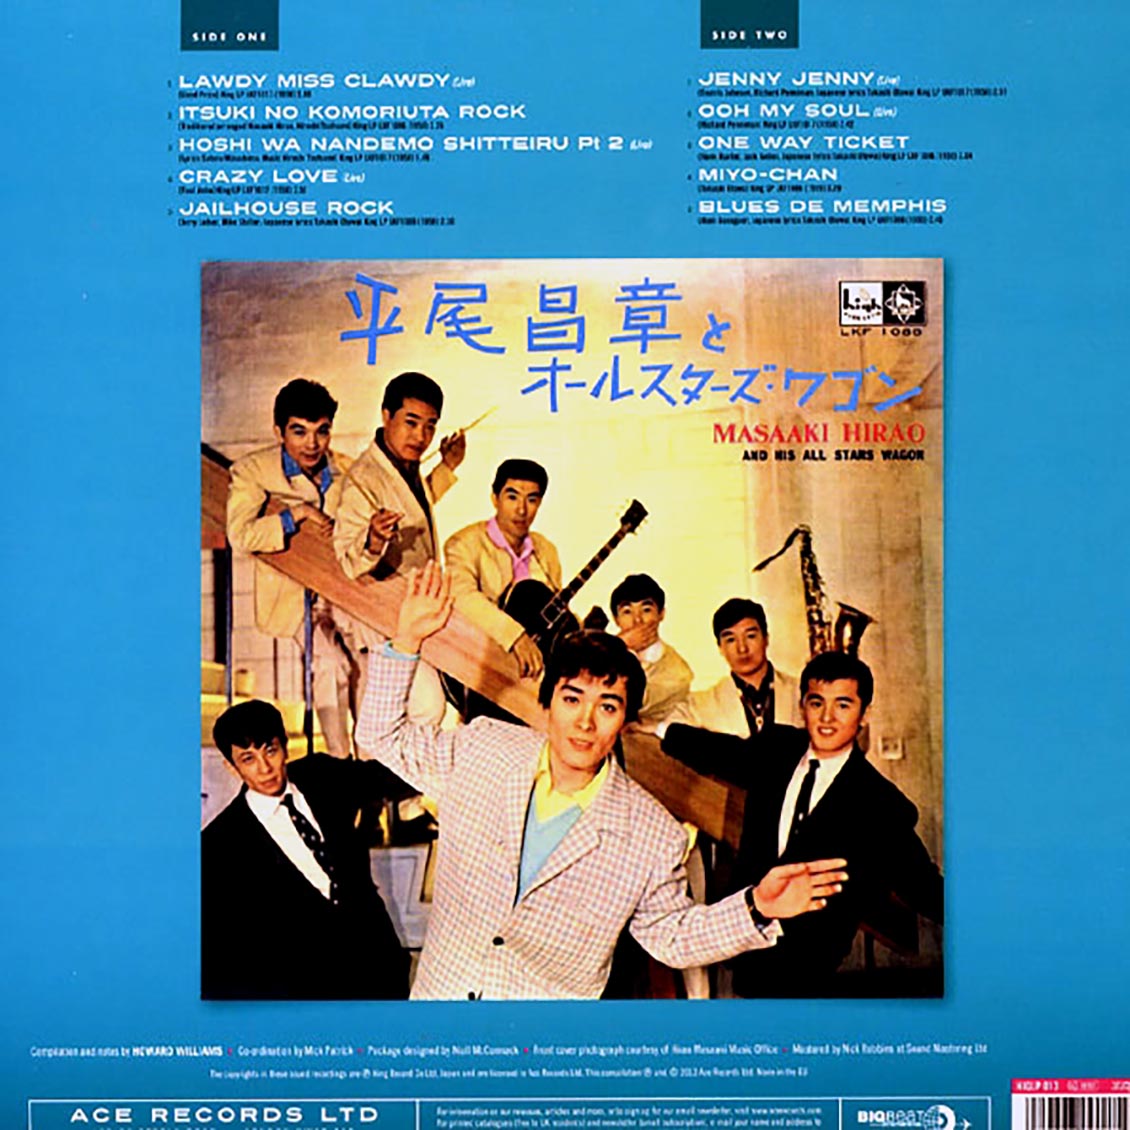 Masaki Hirao & His All Stars Wagon - Nippon Rock 'N' Roll: The Birth Of Japanese Rokabirii 1958-1960